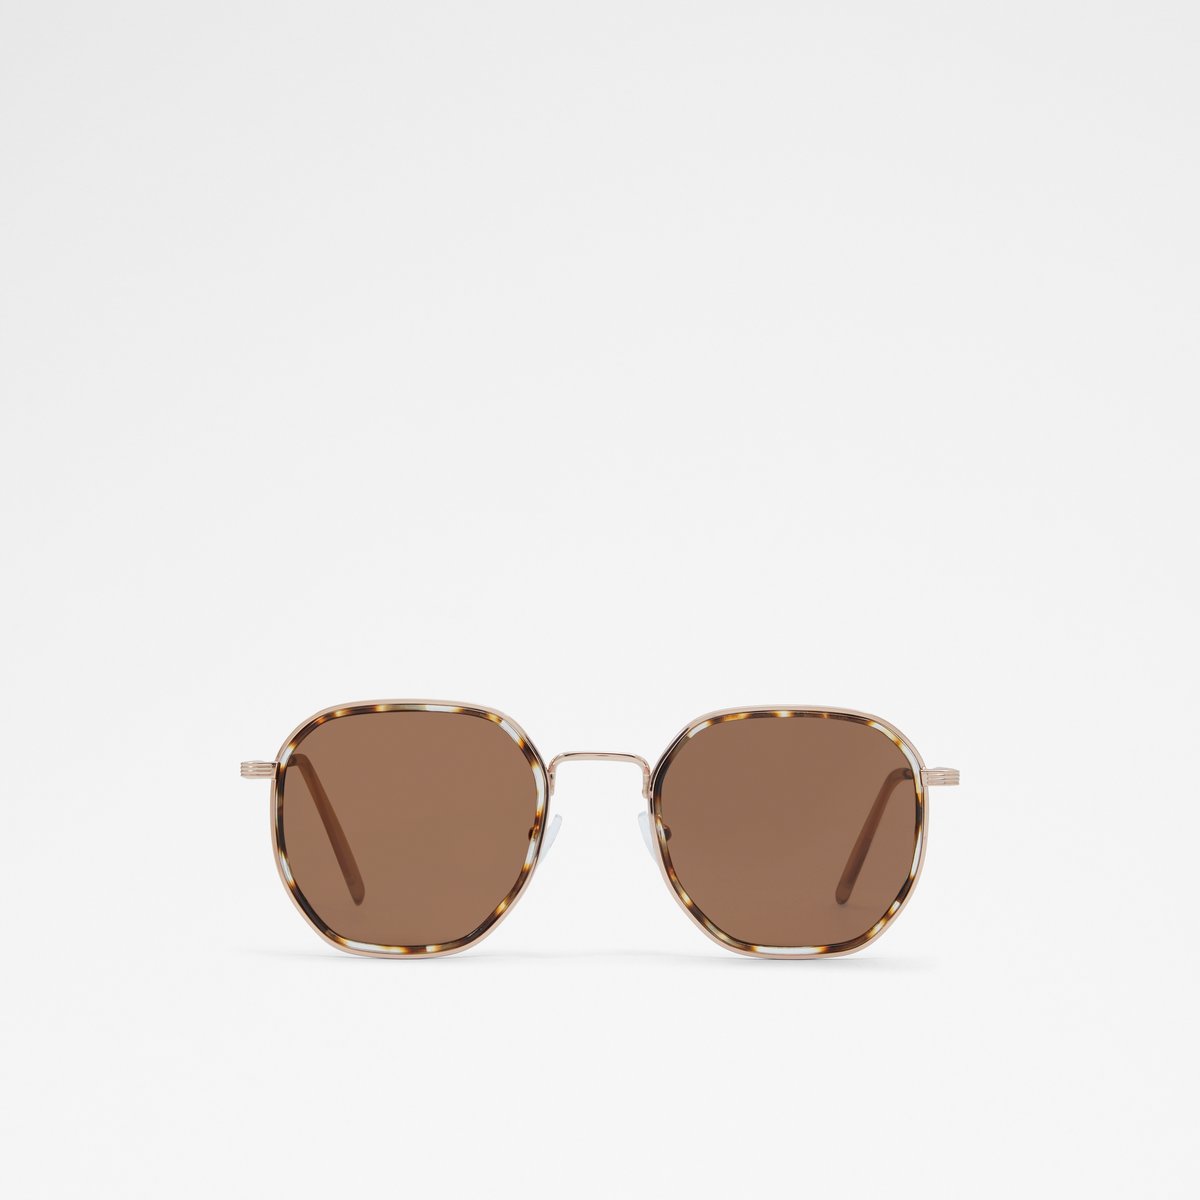 Cigolith Round Sunglasses